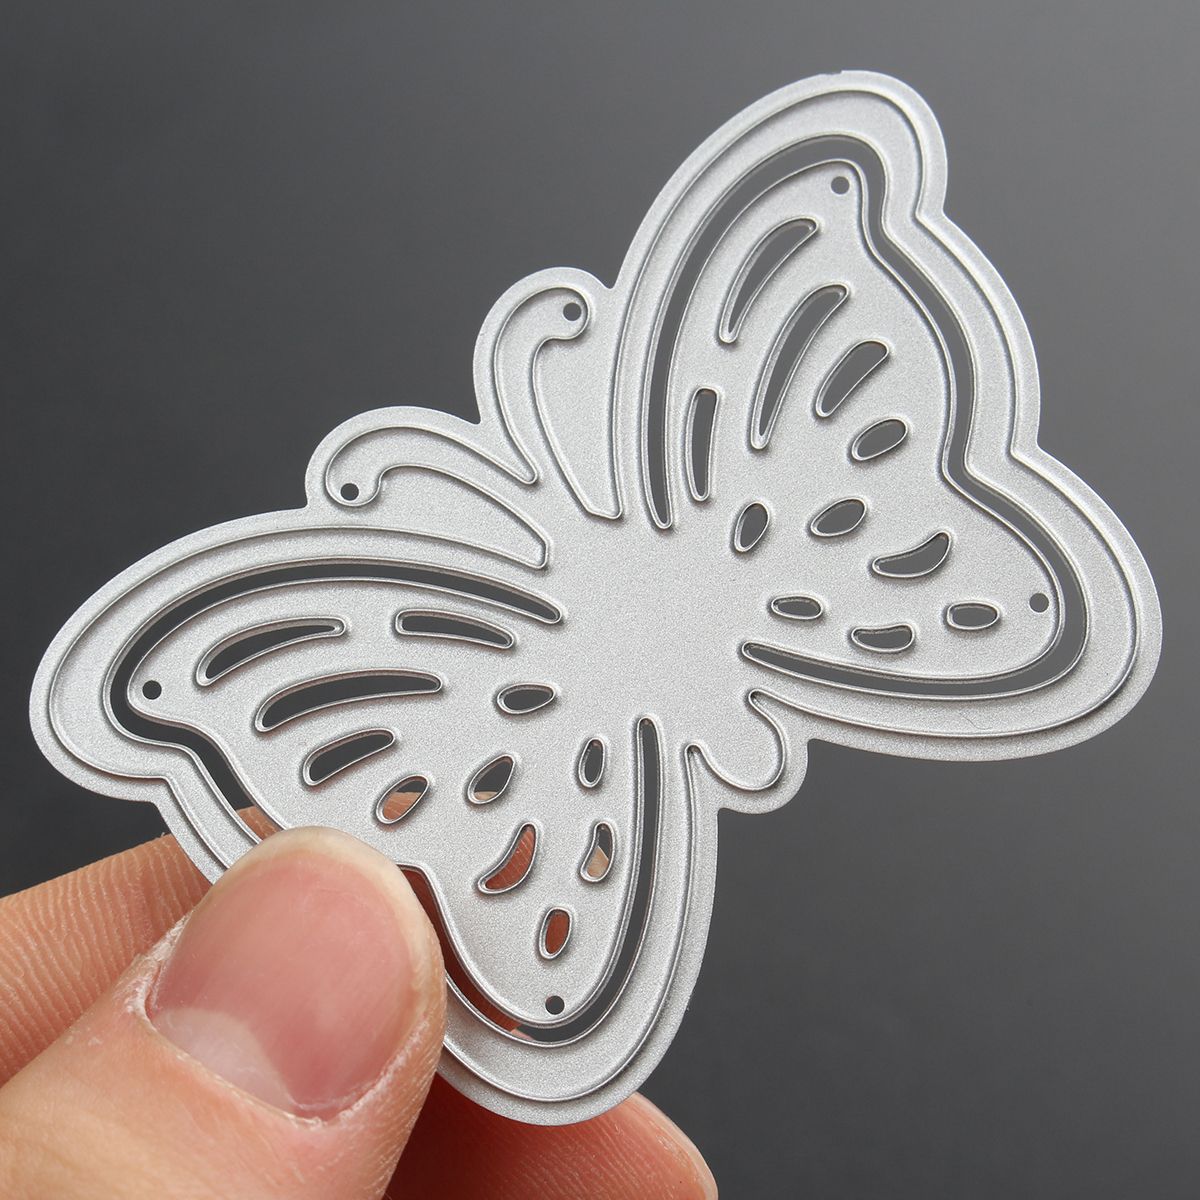 DIY-Butterfly-Metal-Cutting-Dies-Scrapbook-Album-Paper-Card-Embossing-Craft-1172565